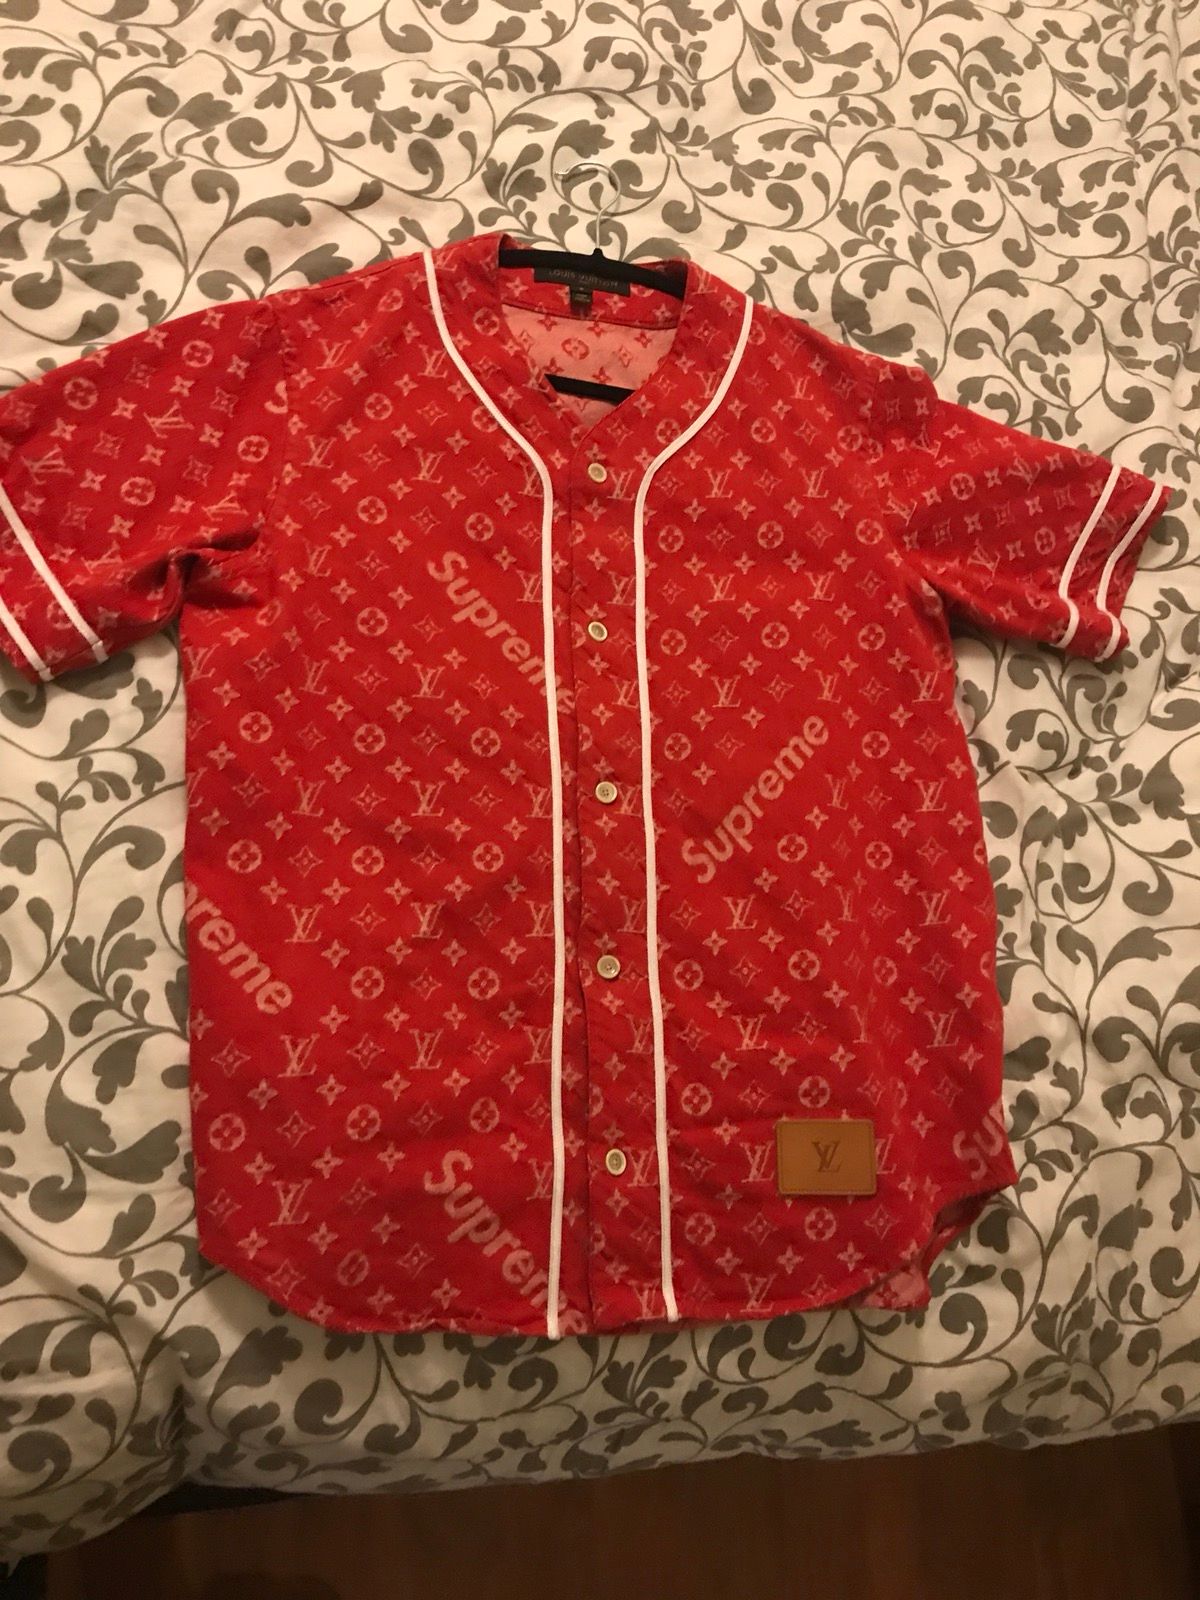 Supreme Louis Vuitton x Supreme Red Denim Baseball Shirt